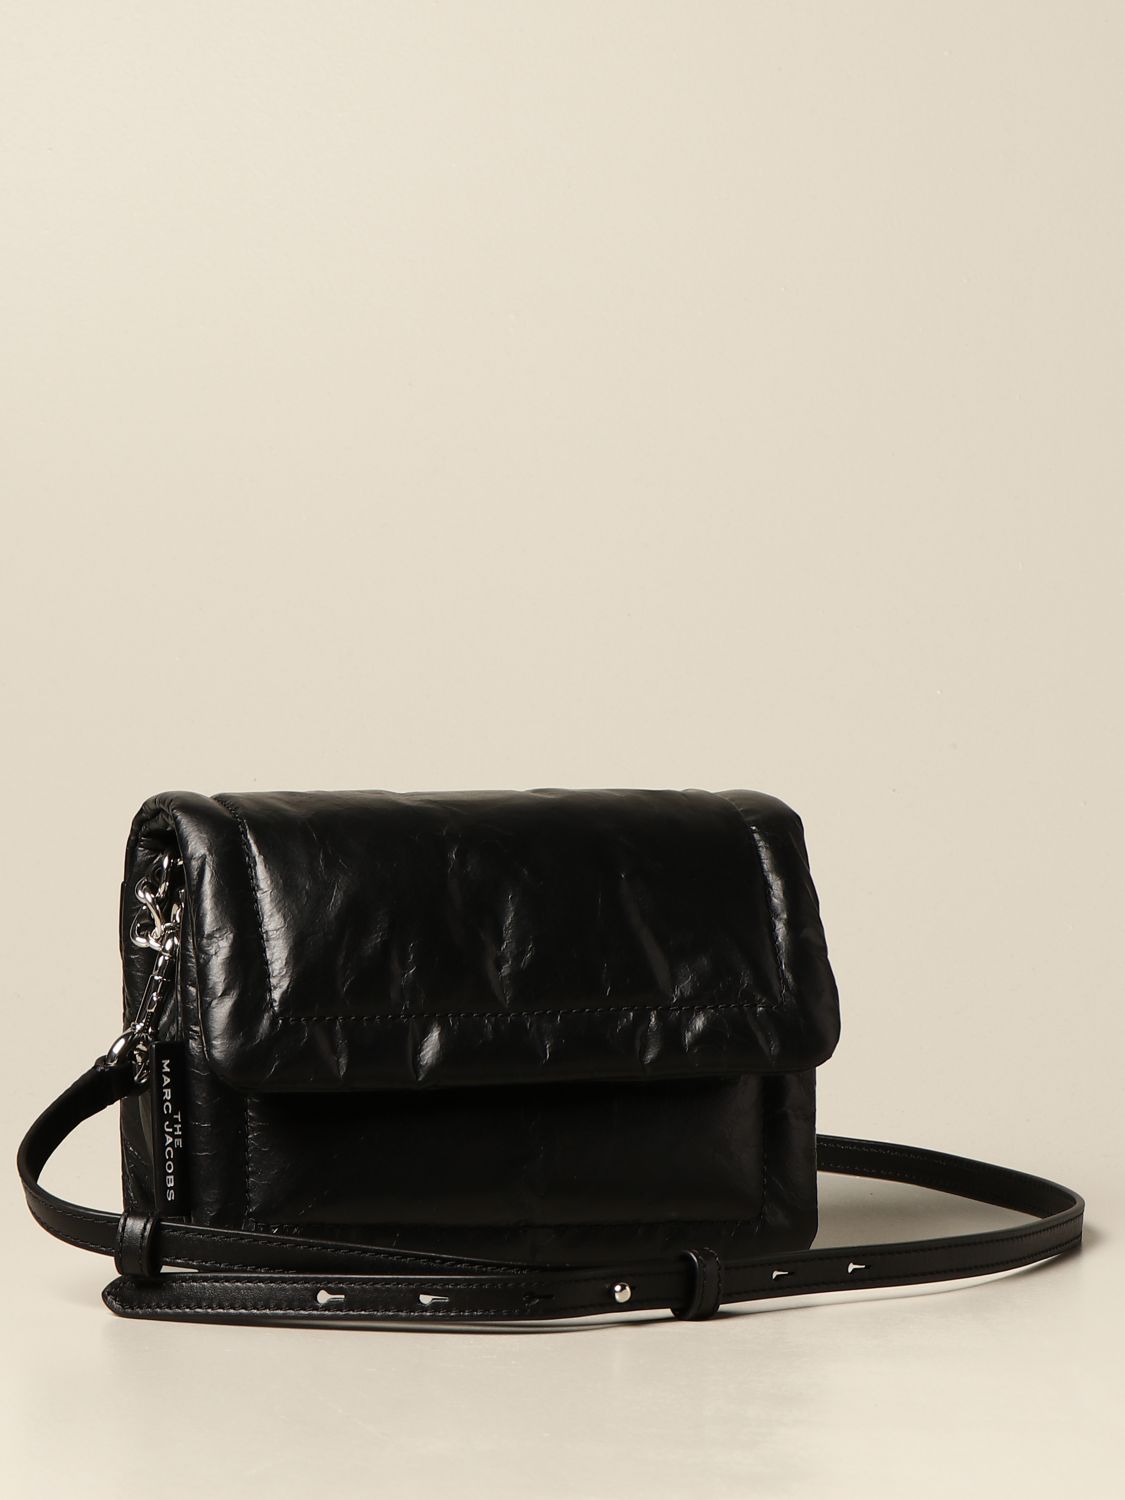 The Marc Jacobs Mini Pillow Bag #Sponsored , #affiliate, #Jacobs